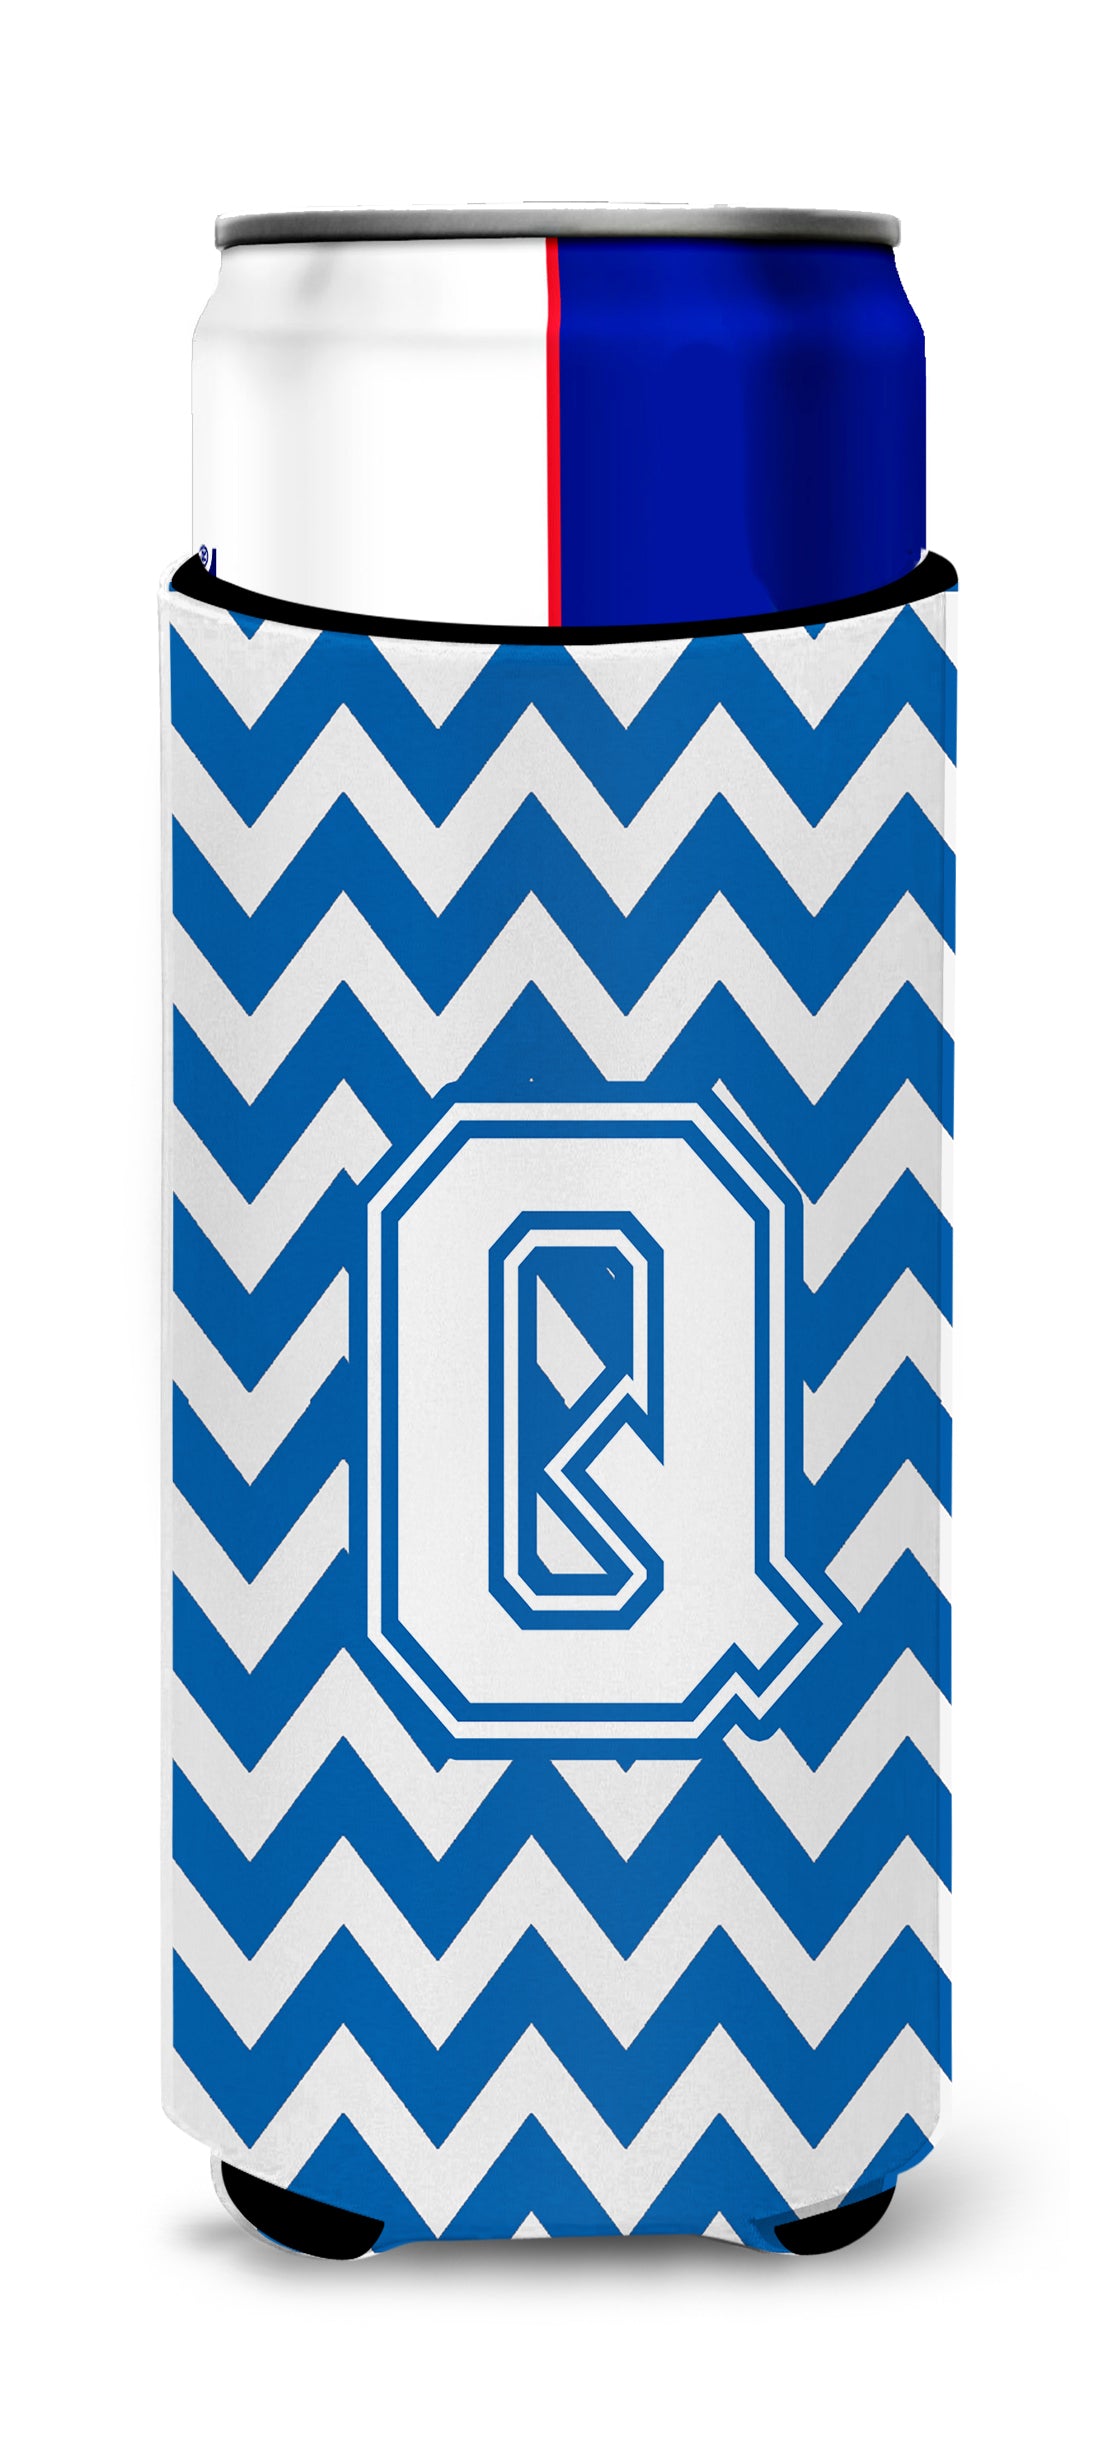 Letter Q Chevron Blue and White Ultra Beverage Insulators for slim cans CJ1045-QMUK.